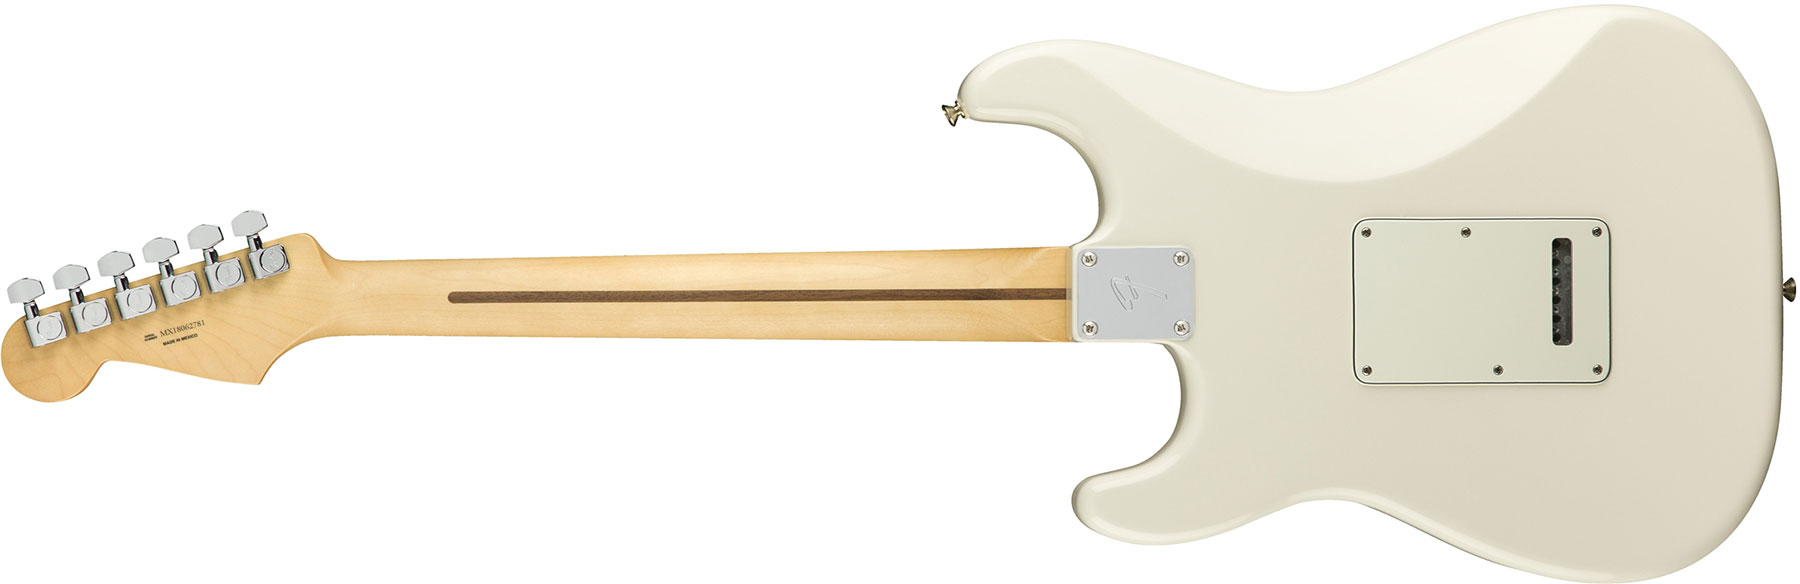 Fender Strat Player Mex Sss Mn - Polar White - Guitarra eléctrica con forma de str. - Variation 1